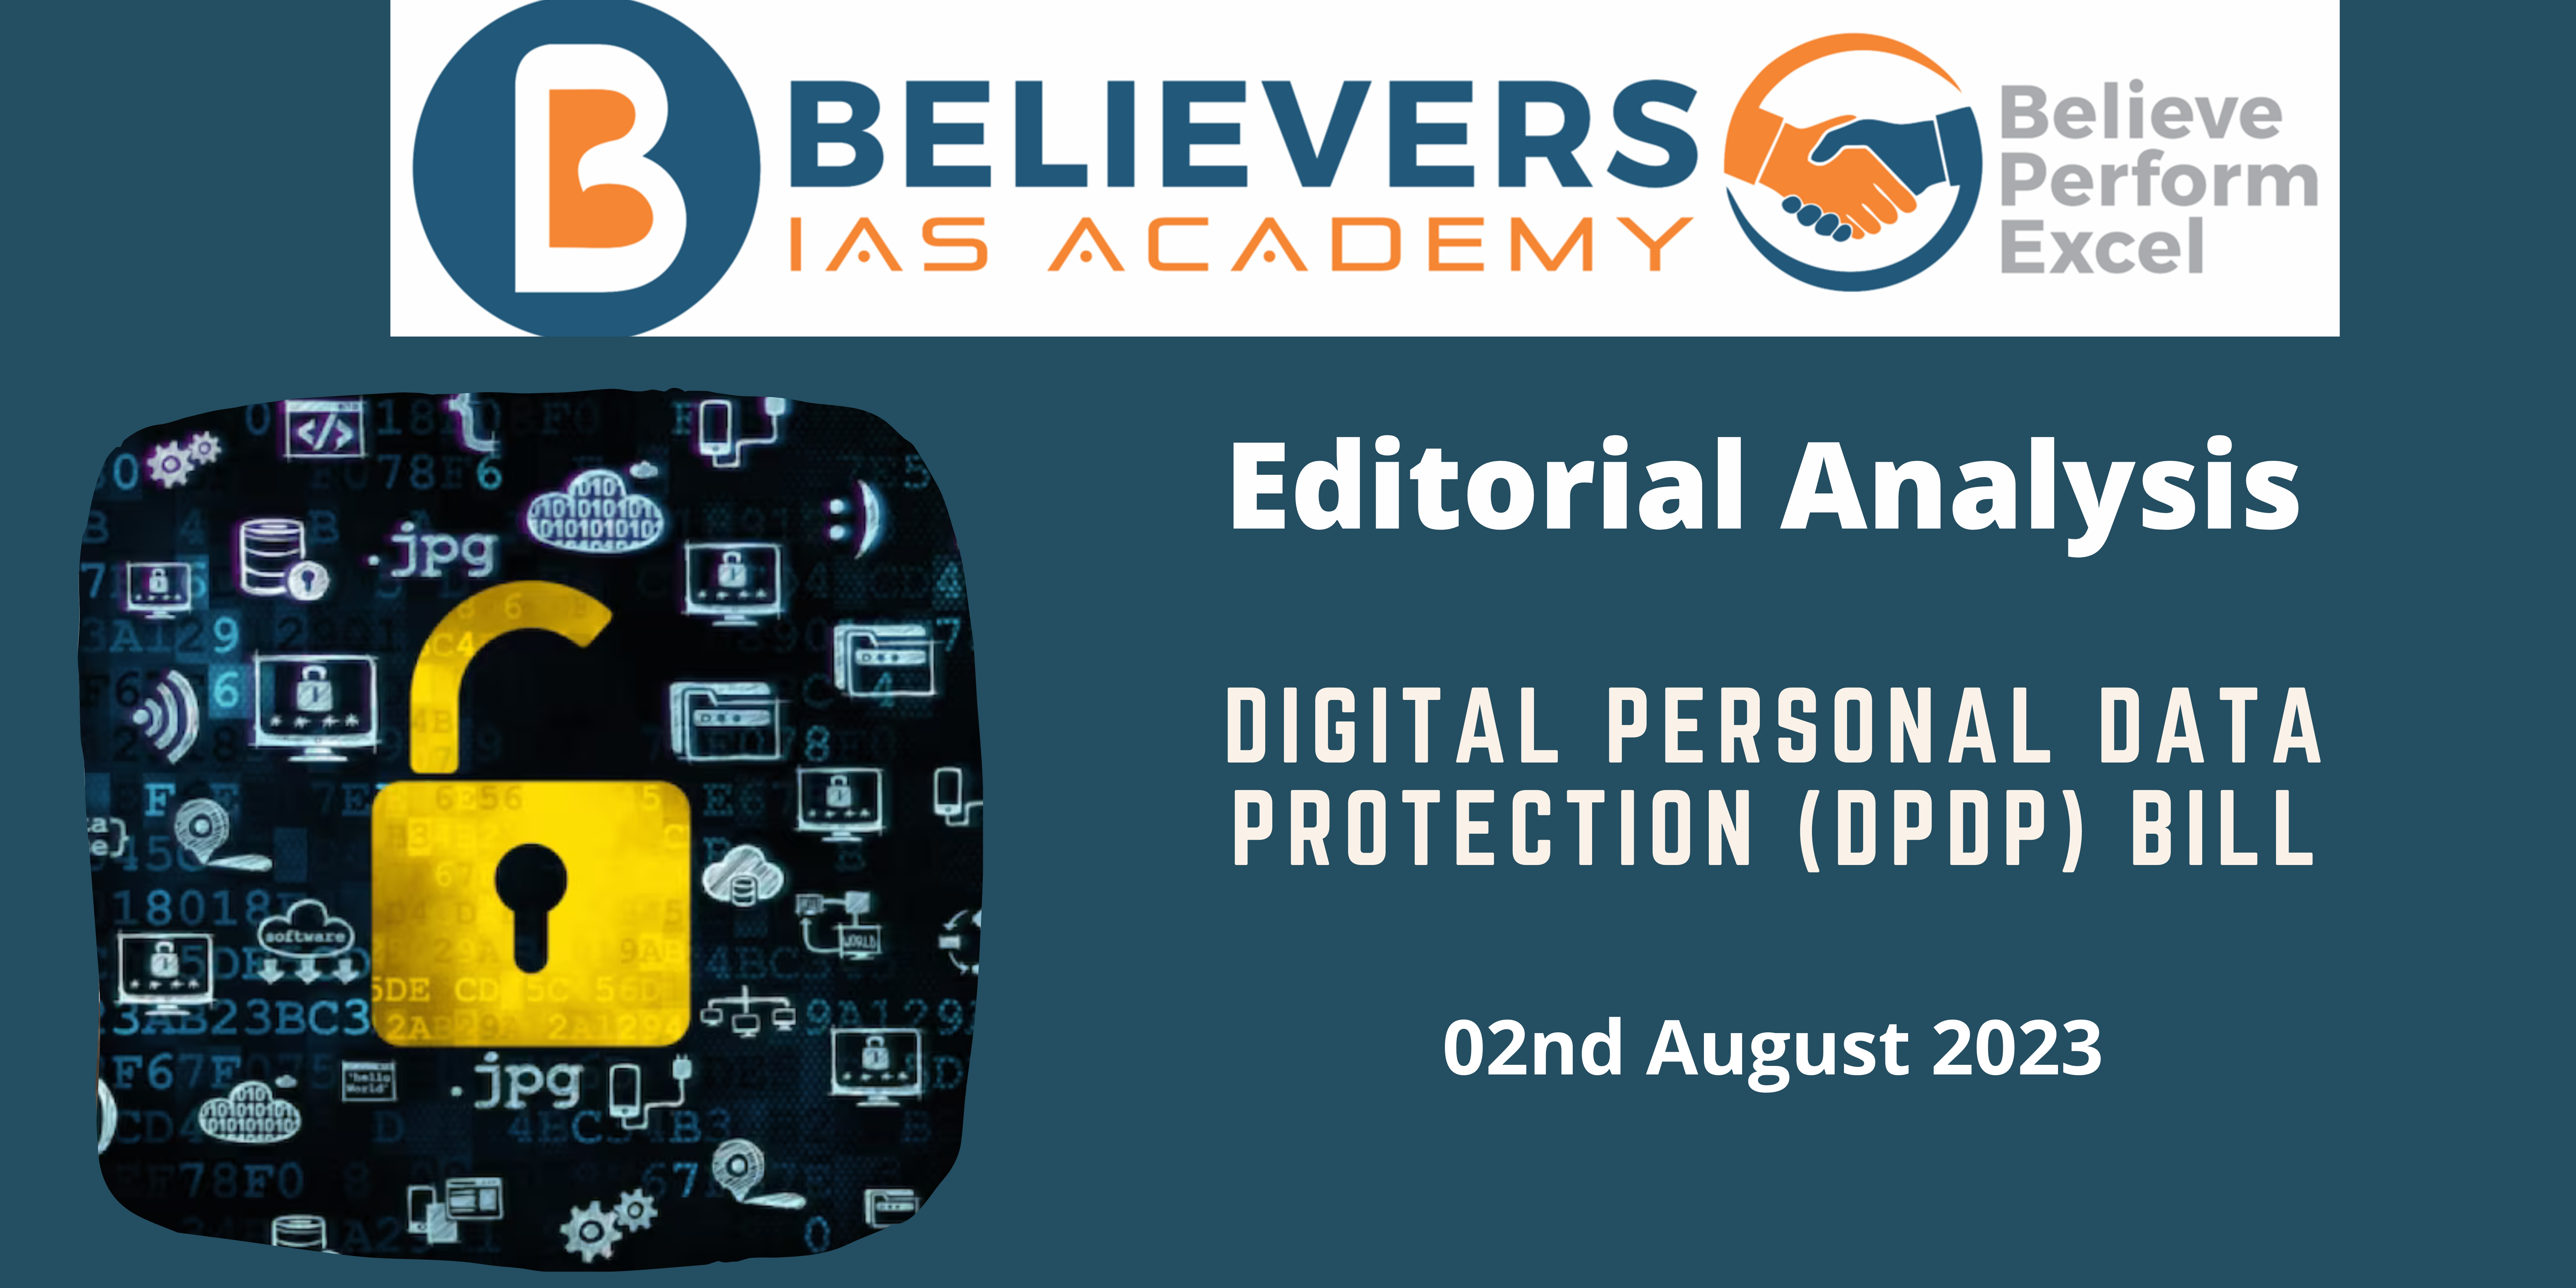 Digital Personal Data Protection (DPDP) Bill